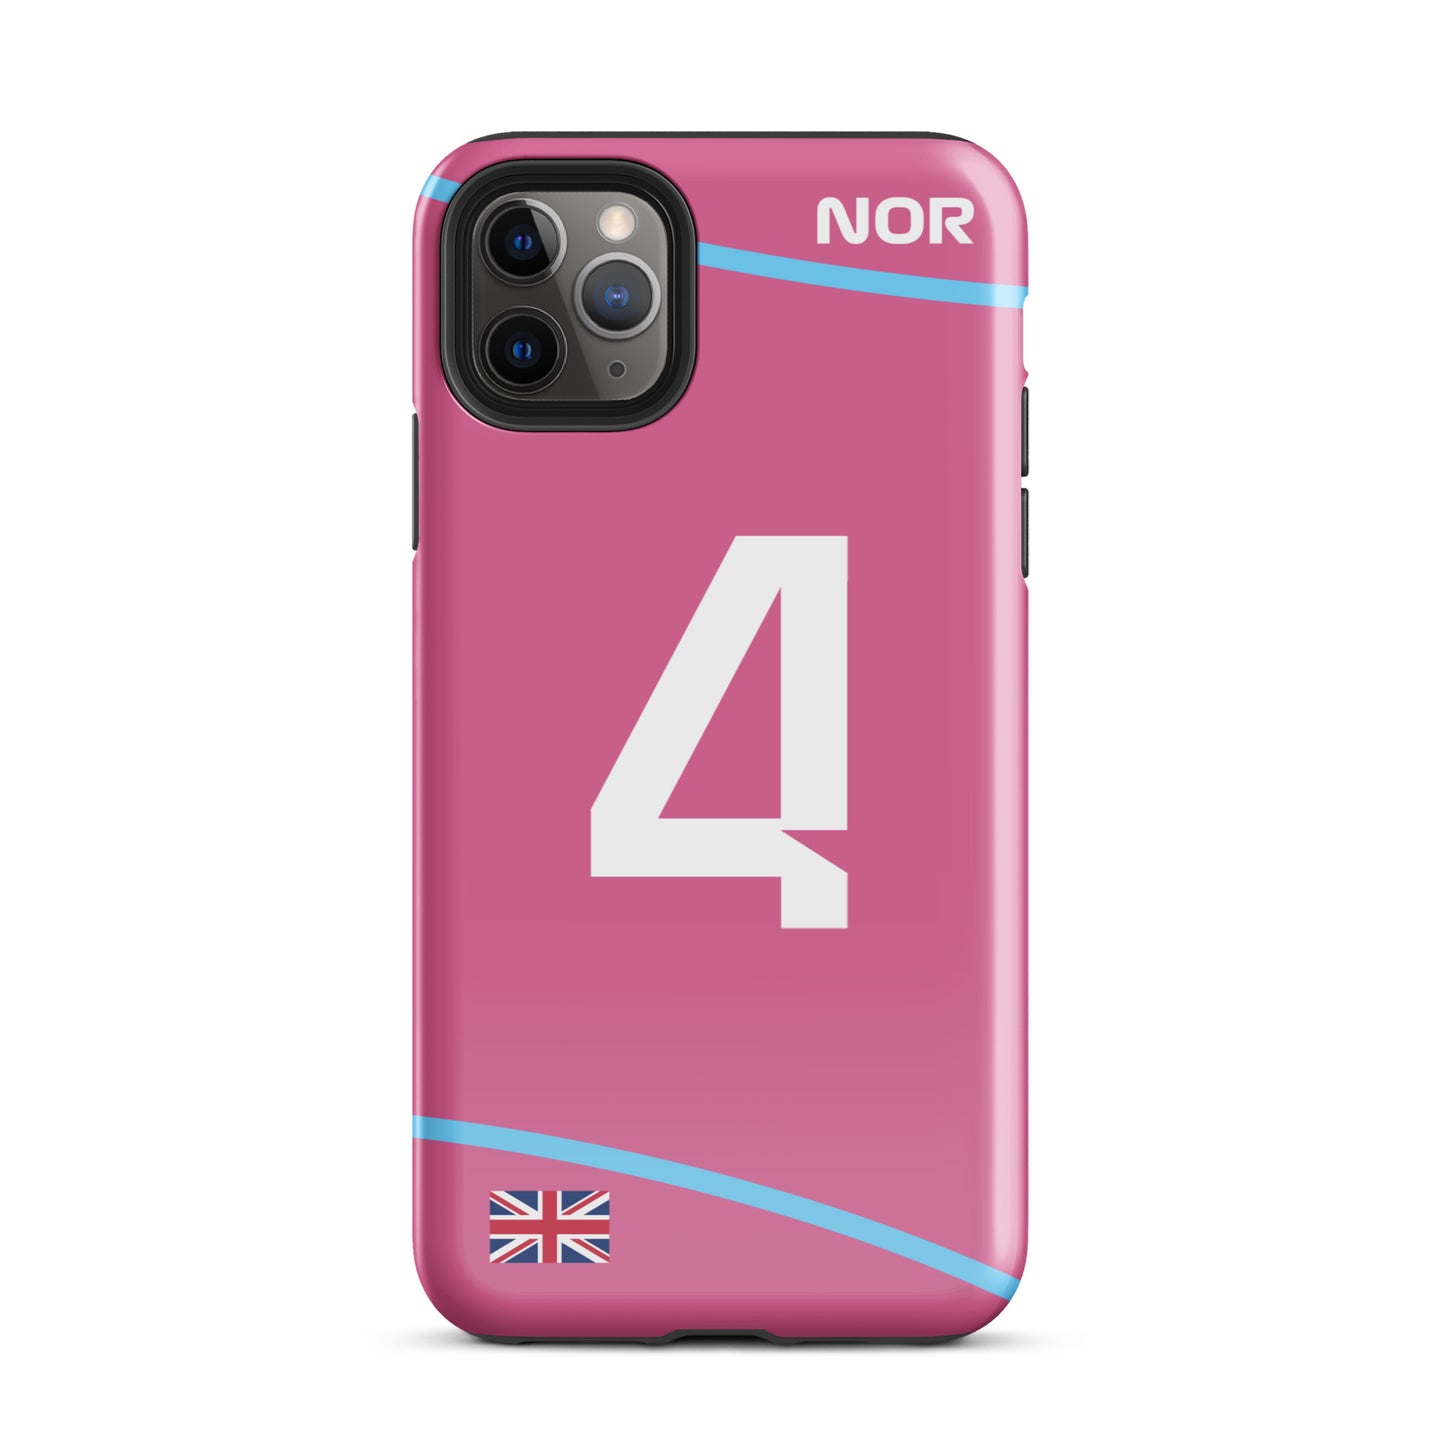 Lando Norris Miami GP Tough iPhone Case 11 pro max glossy case